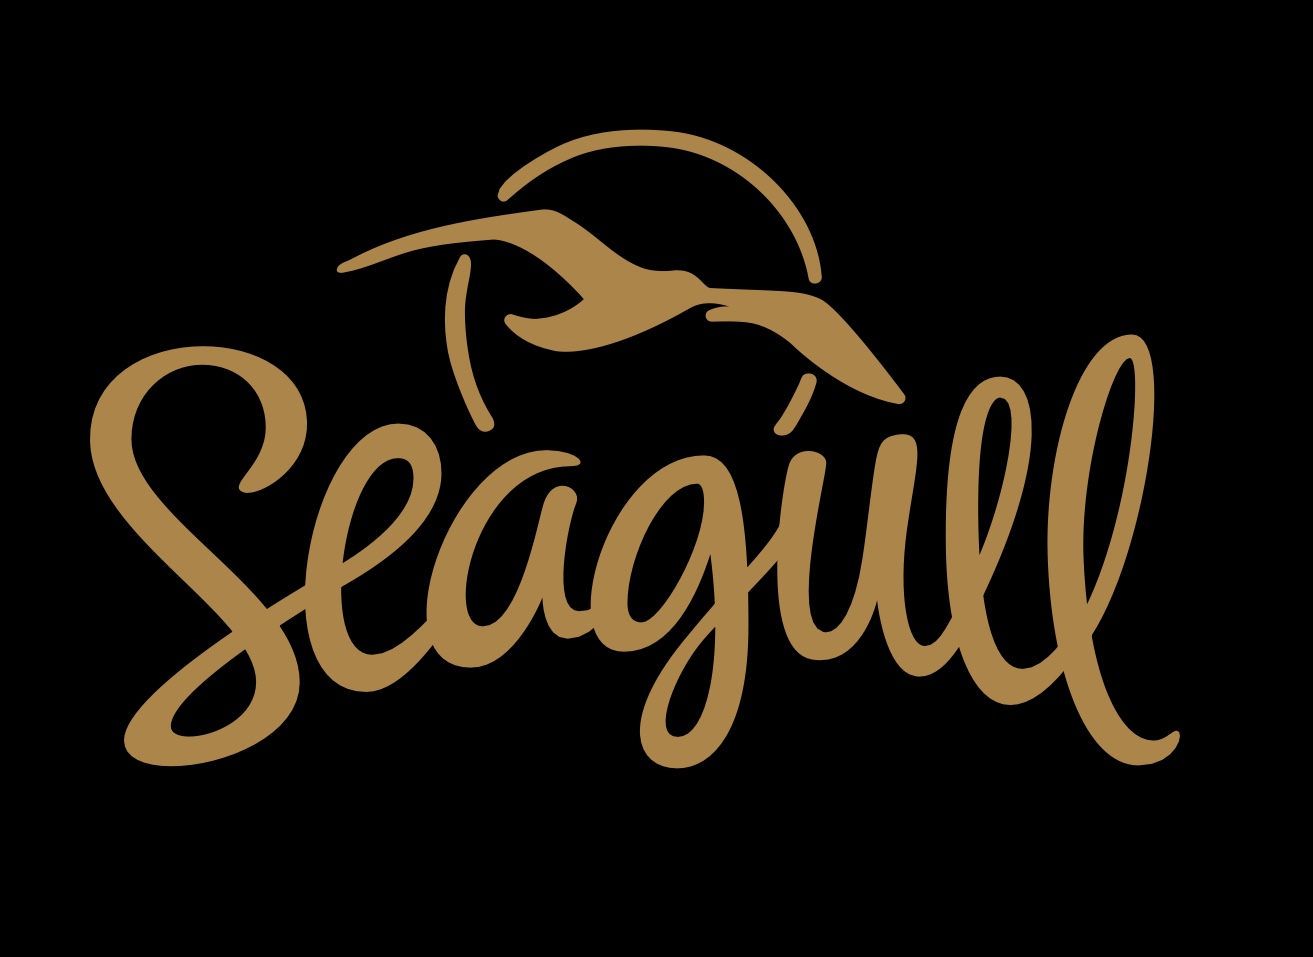 Seagullのアコースティックギターが期間限定で展示中です！